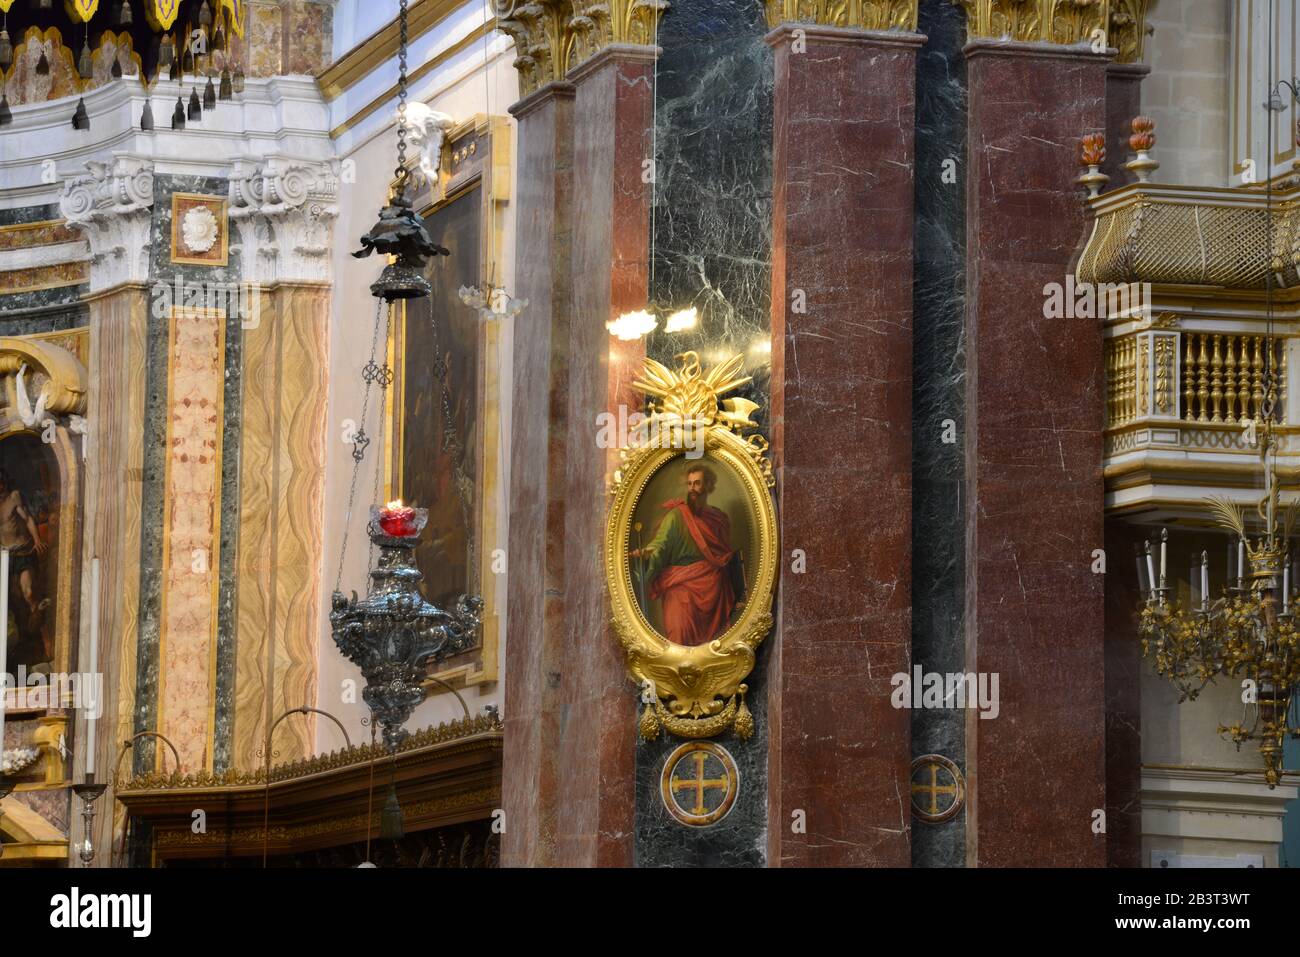 Interior of St Pauls Cathedral, Mdina Stock Photo